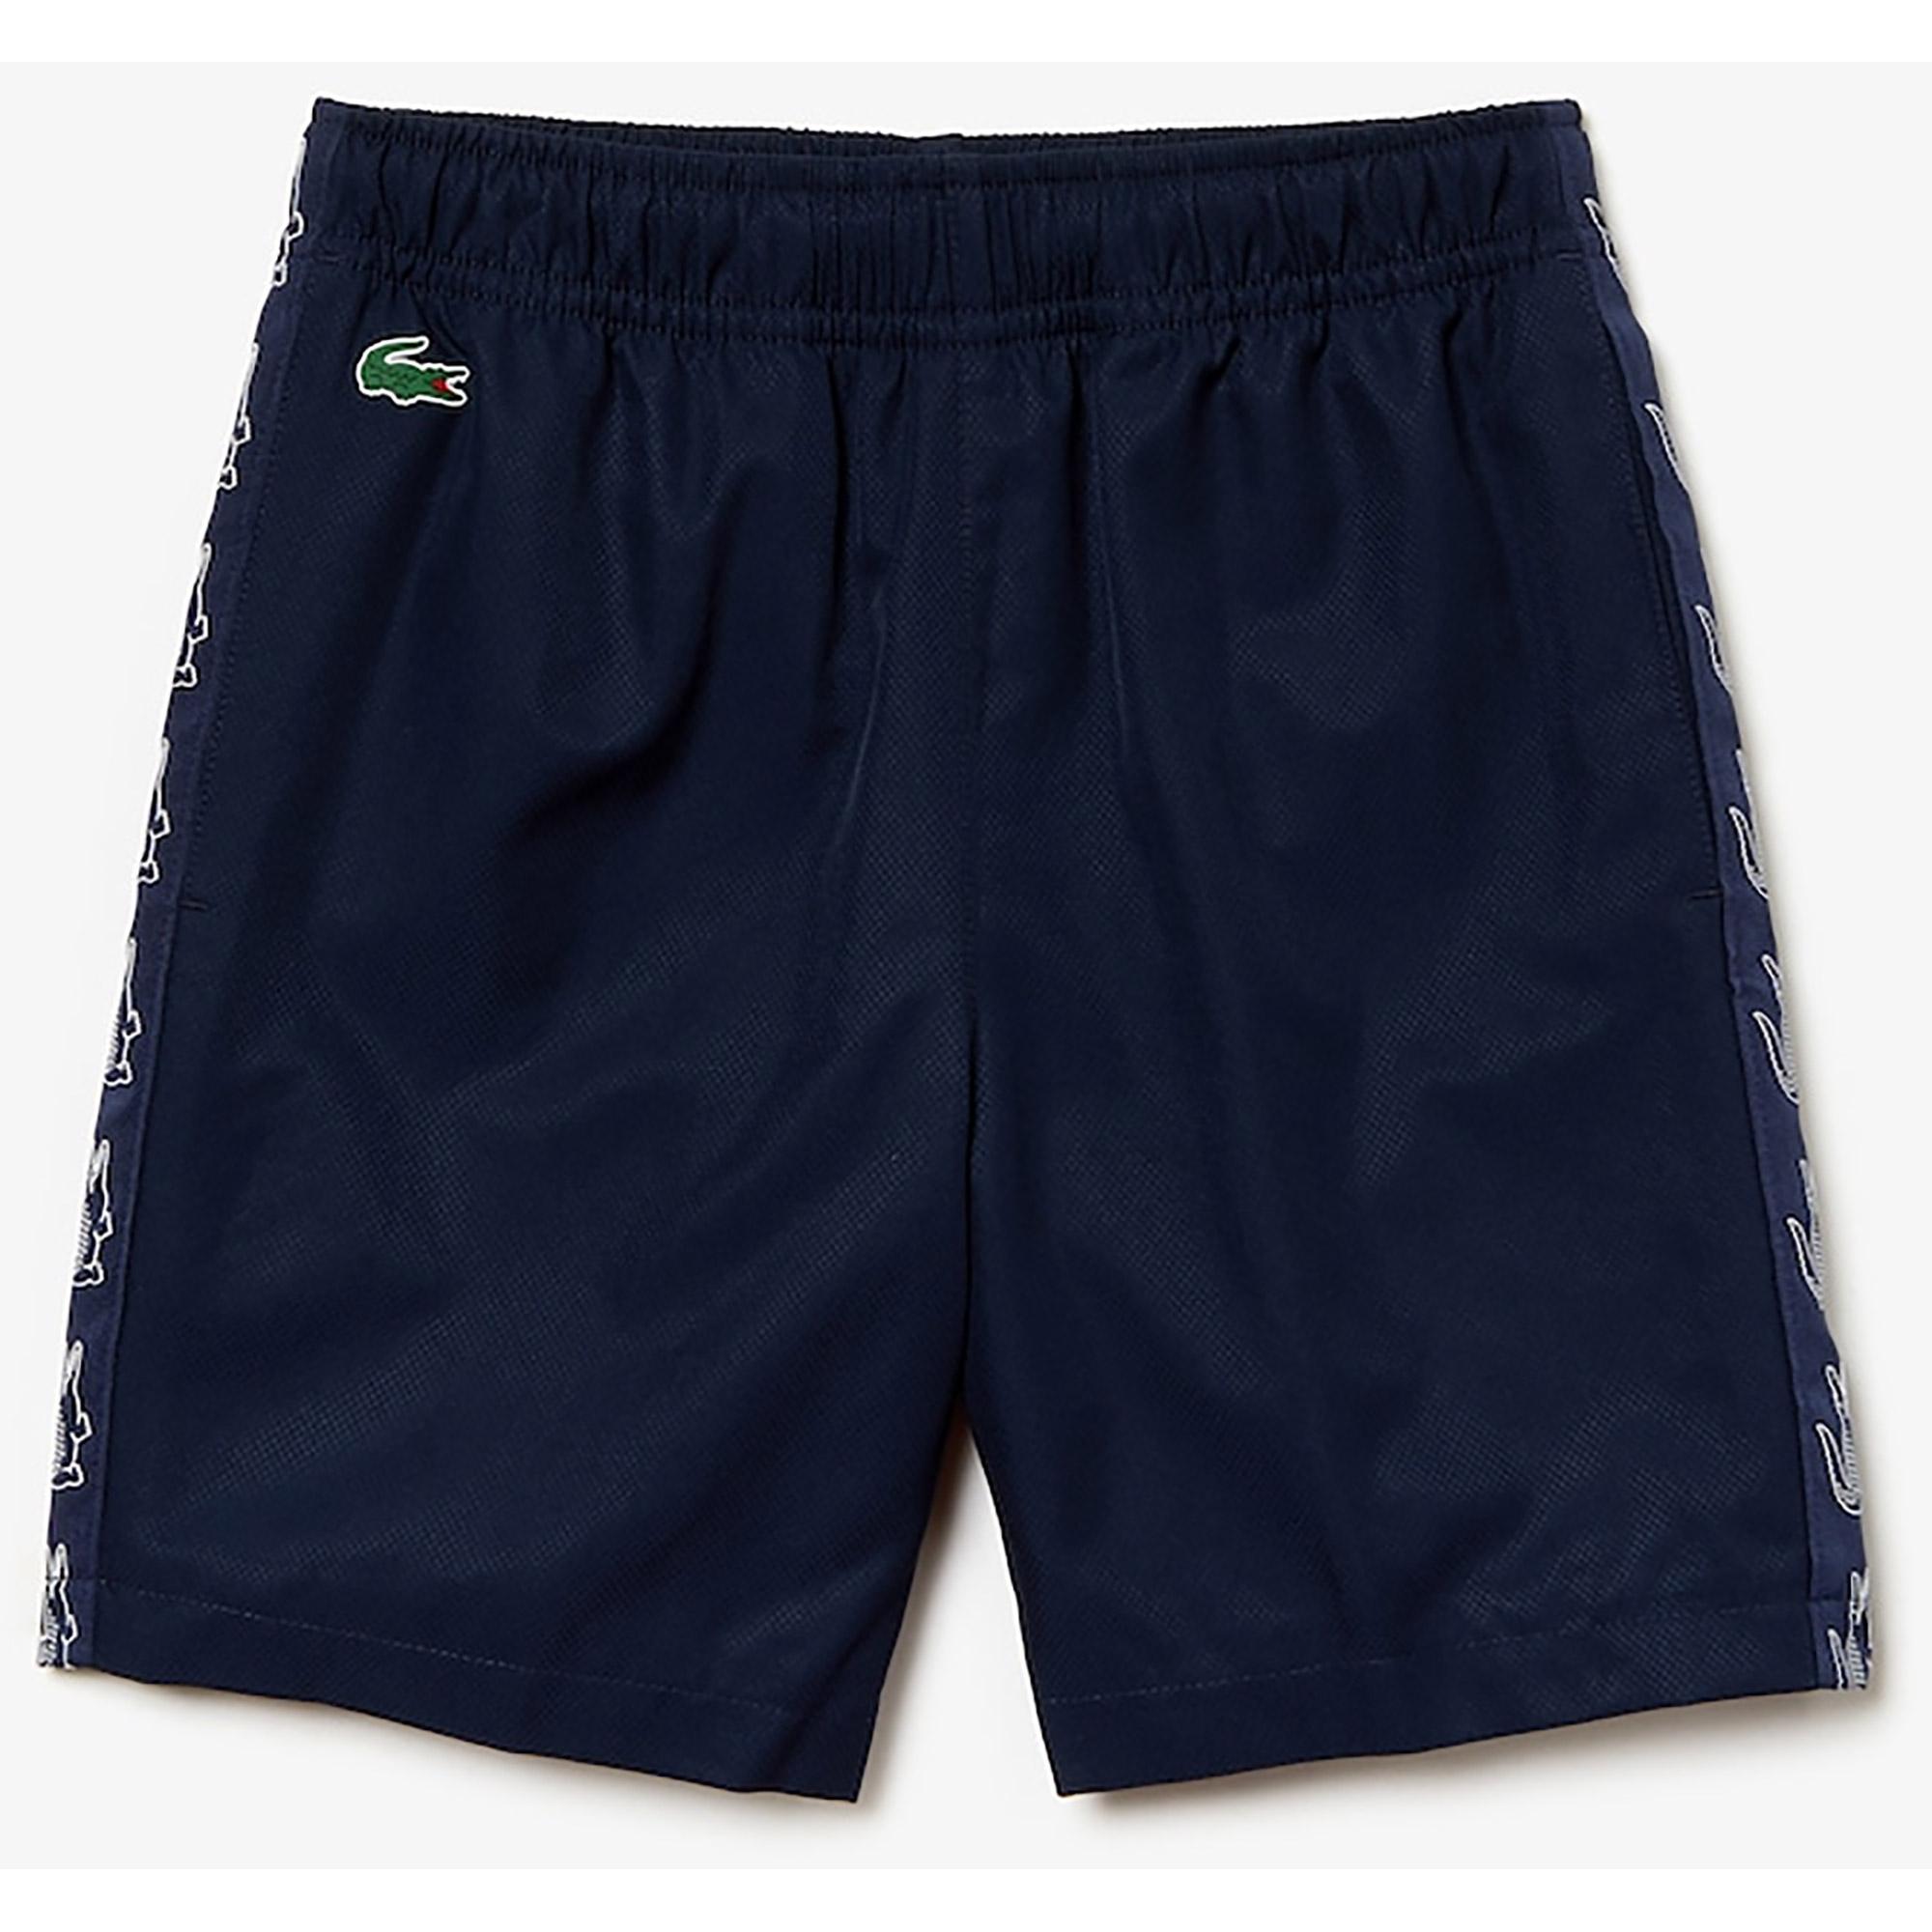 Lacoste Kids Tennis Shorts - Navy Blue - Tennisnuts.com